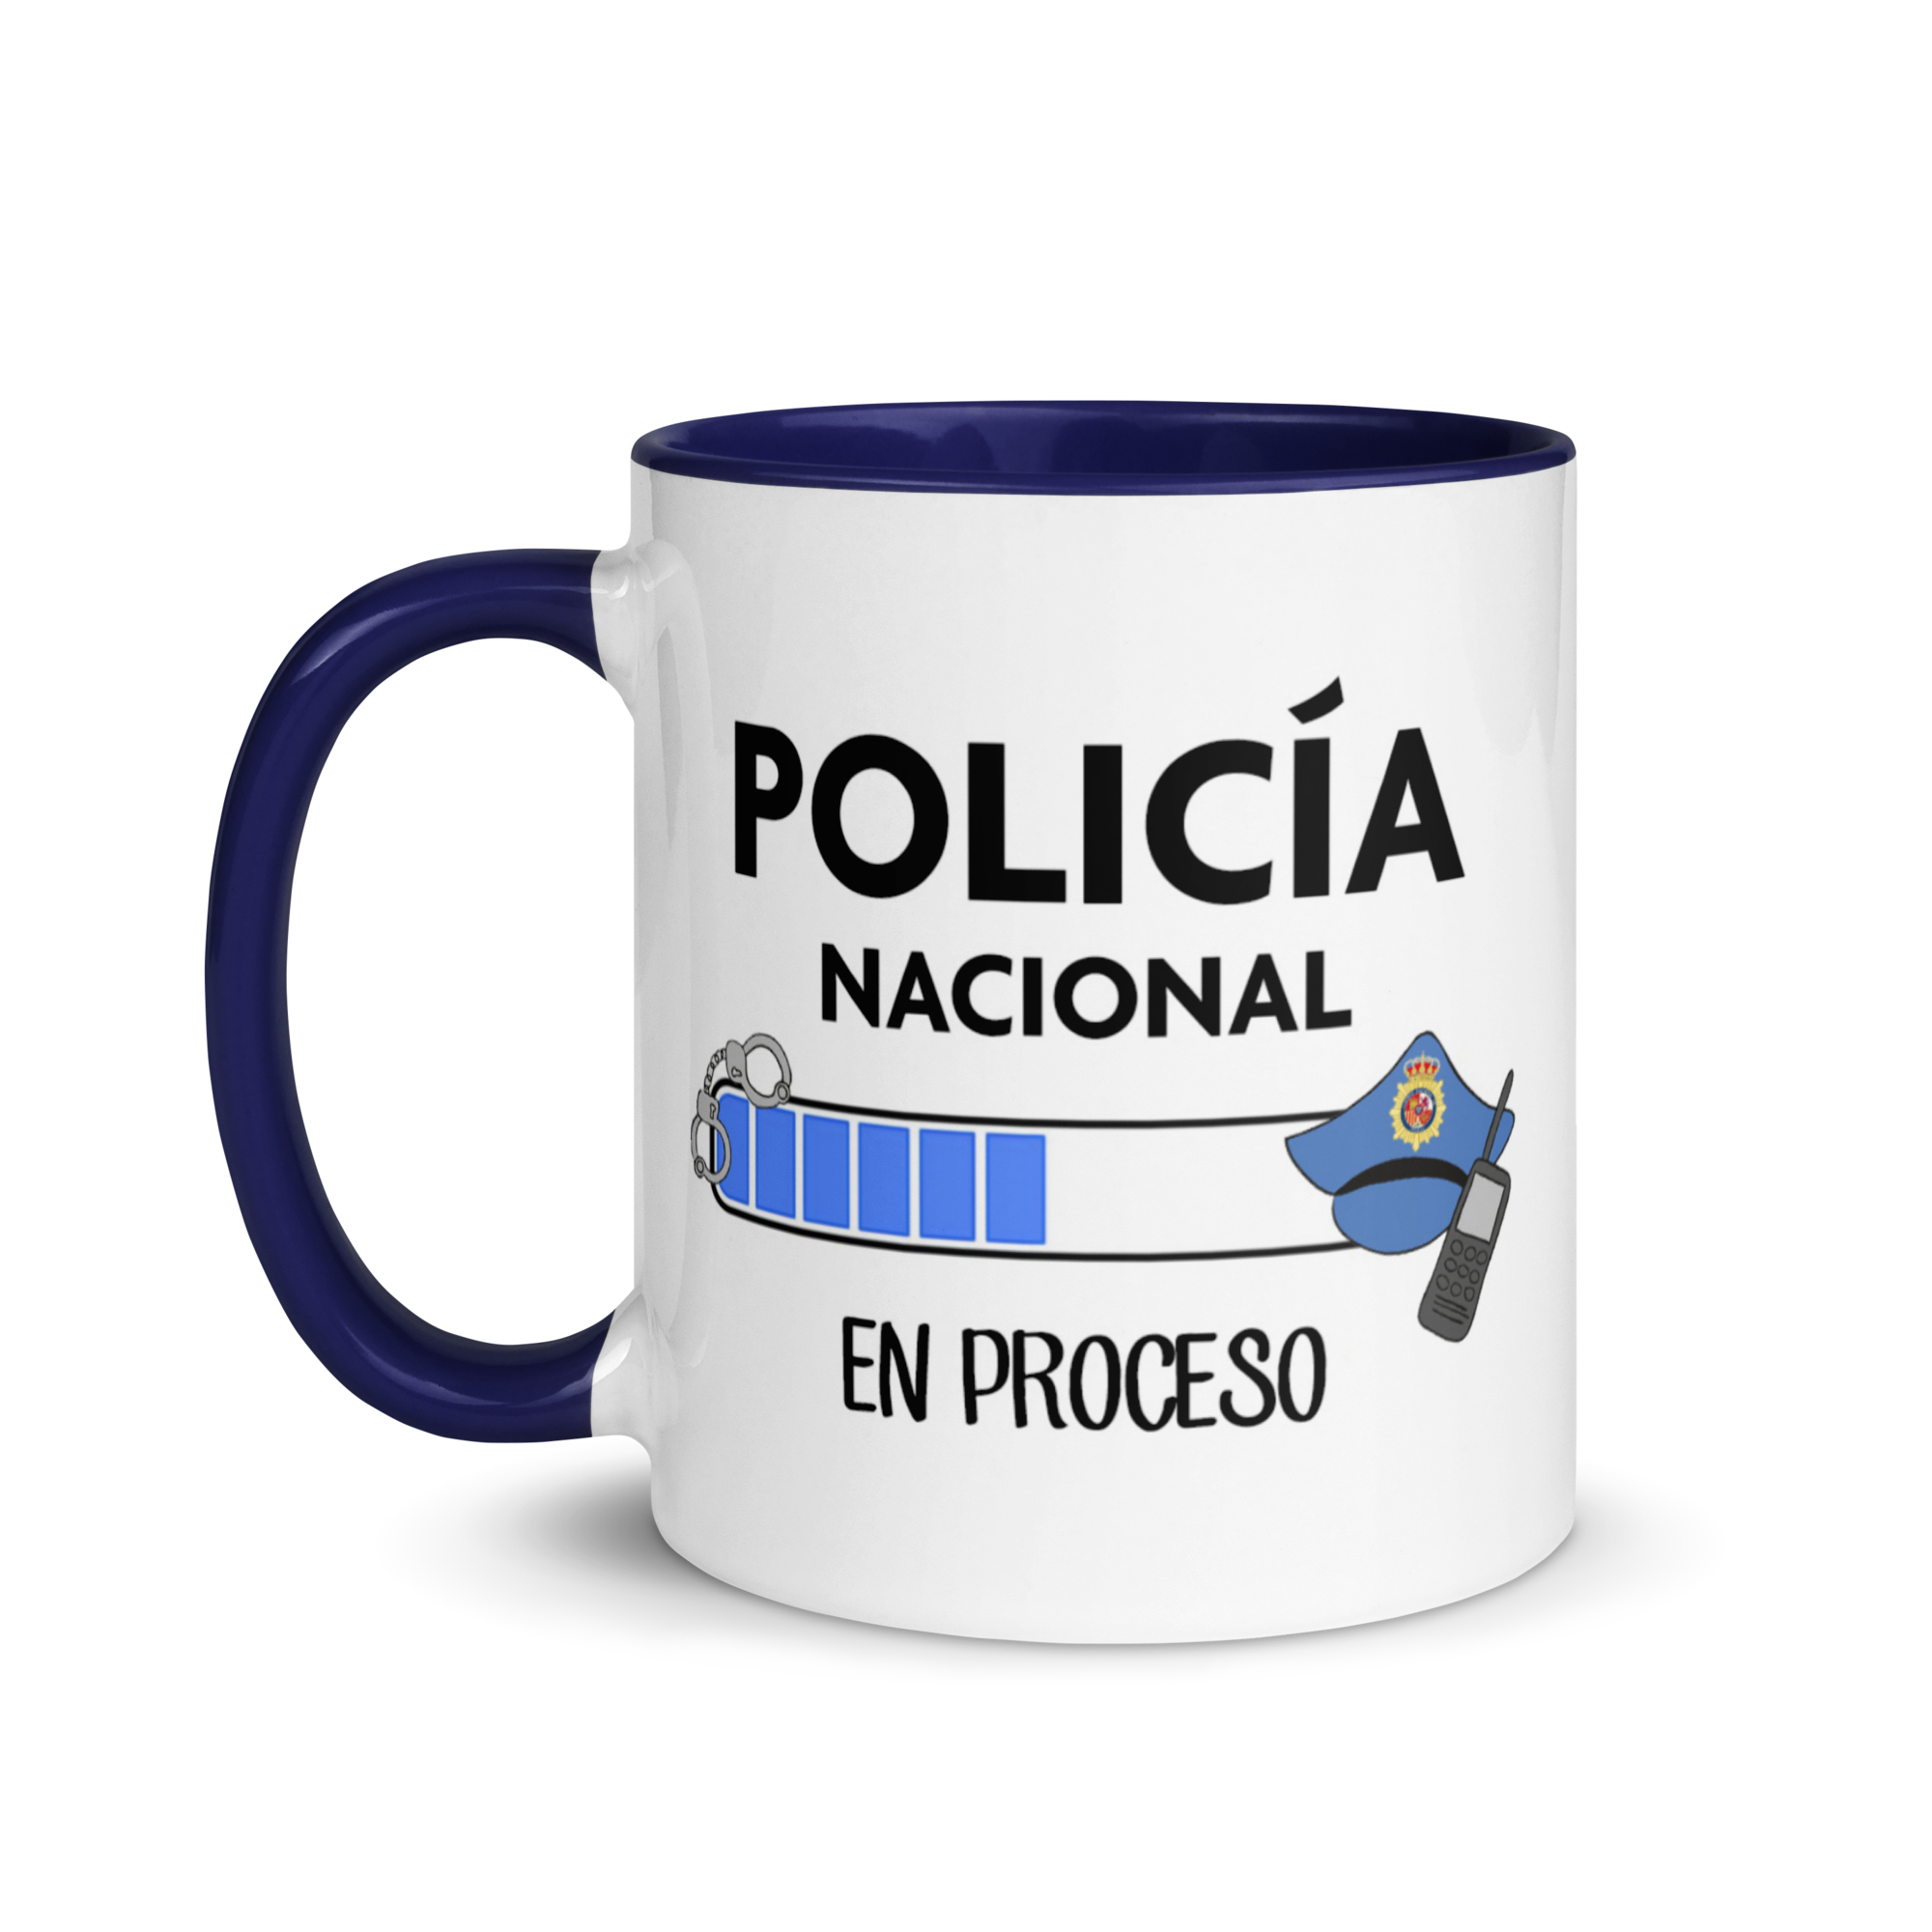 Taza-policia-nacional-en-proceso-desayuno-cafe-kembilove